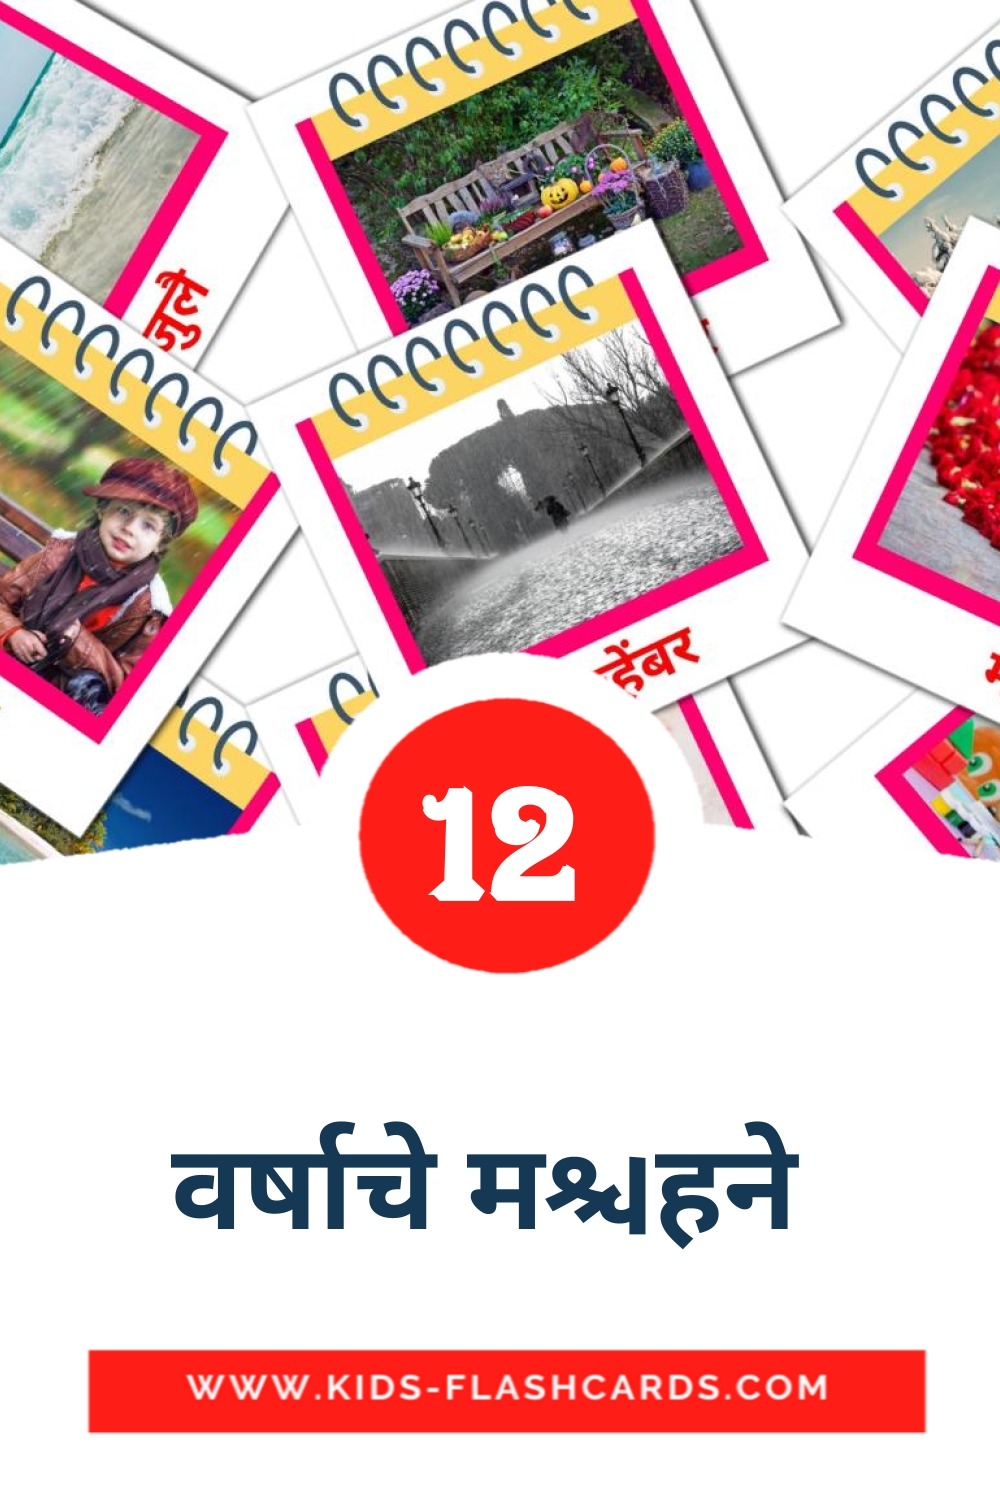 12 carte illustrate di वर्षाचे महिने  per la scuola materna in marathi